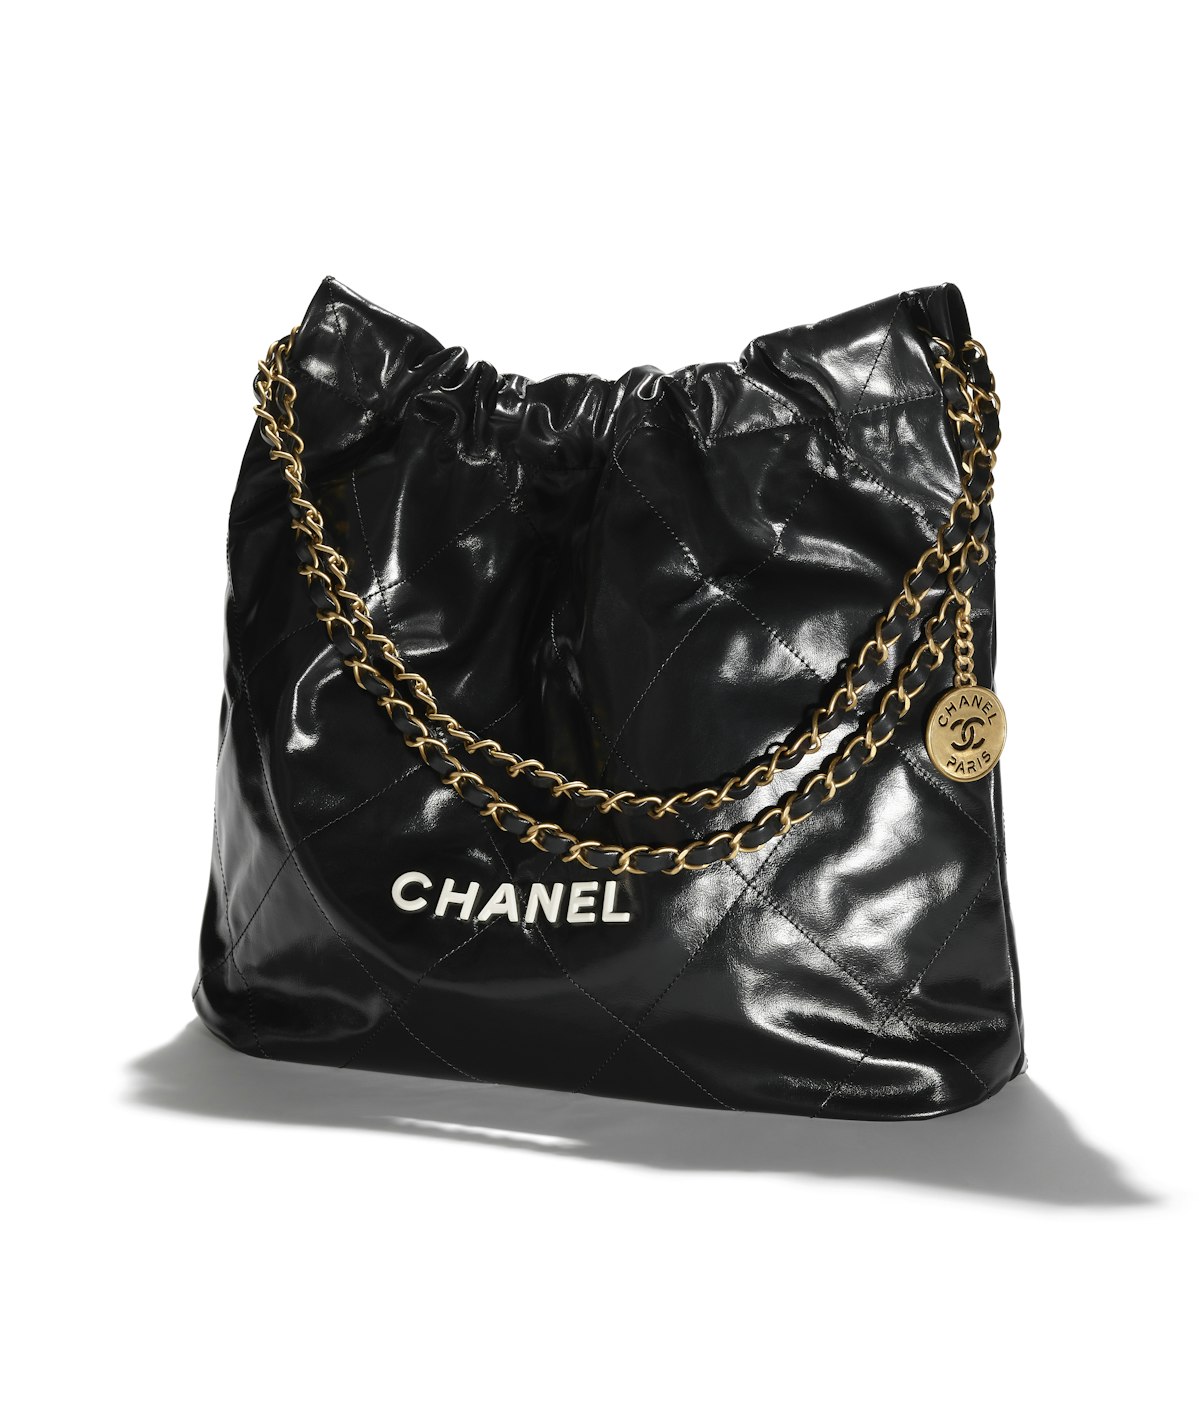 Chanel 22 leather handbag Chanel Black in Leather - 33776764